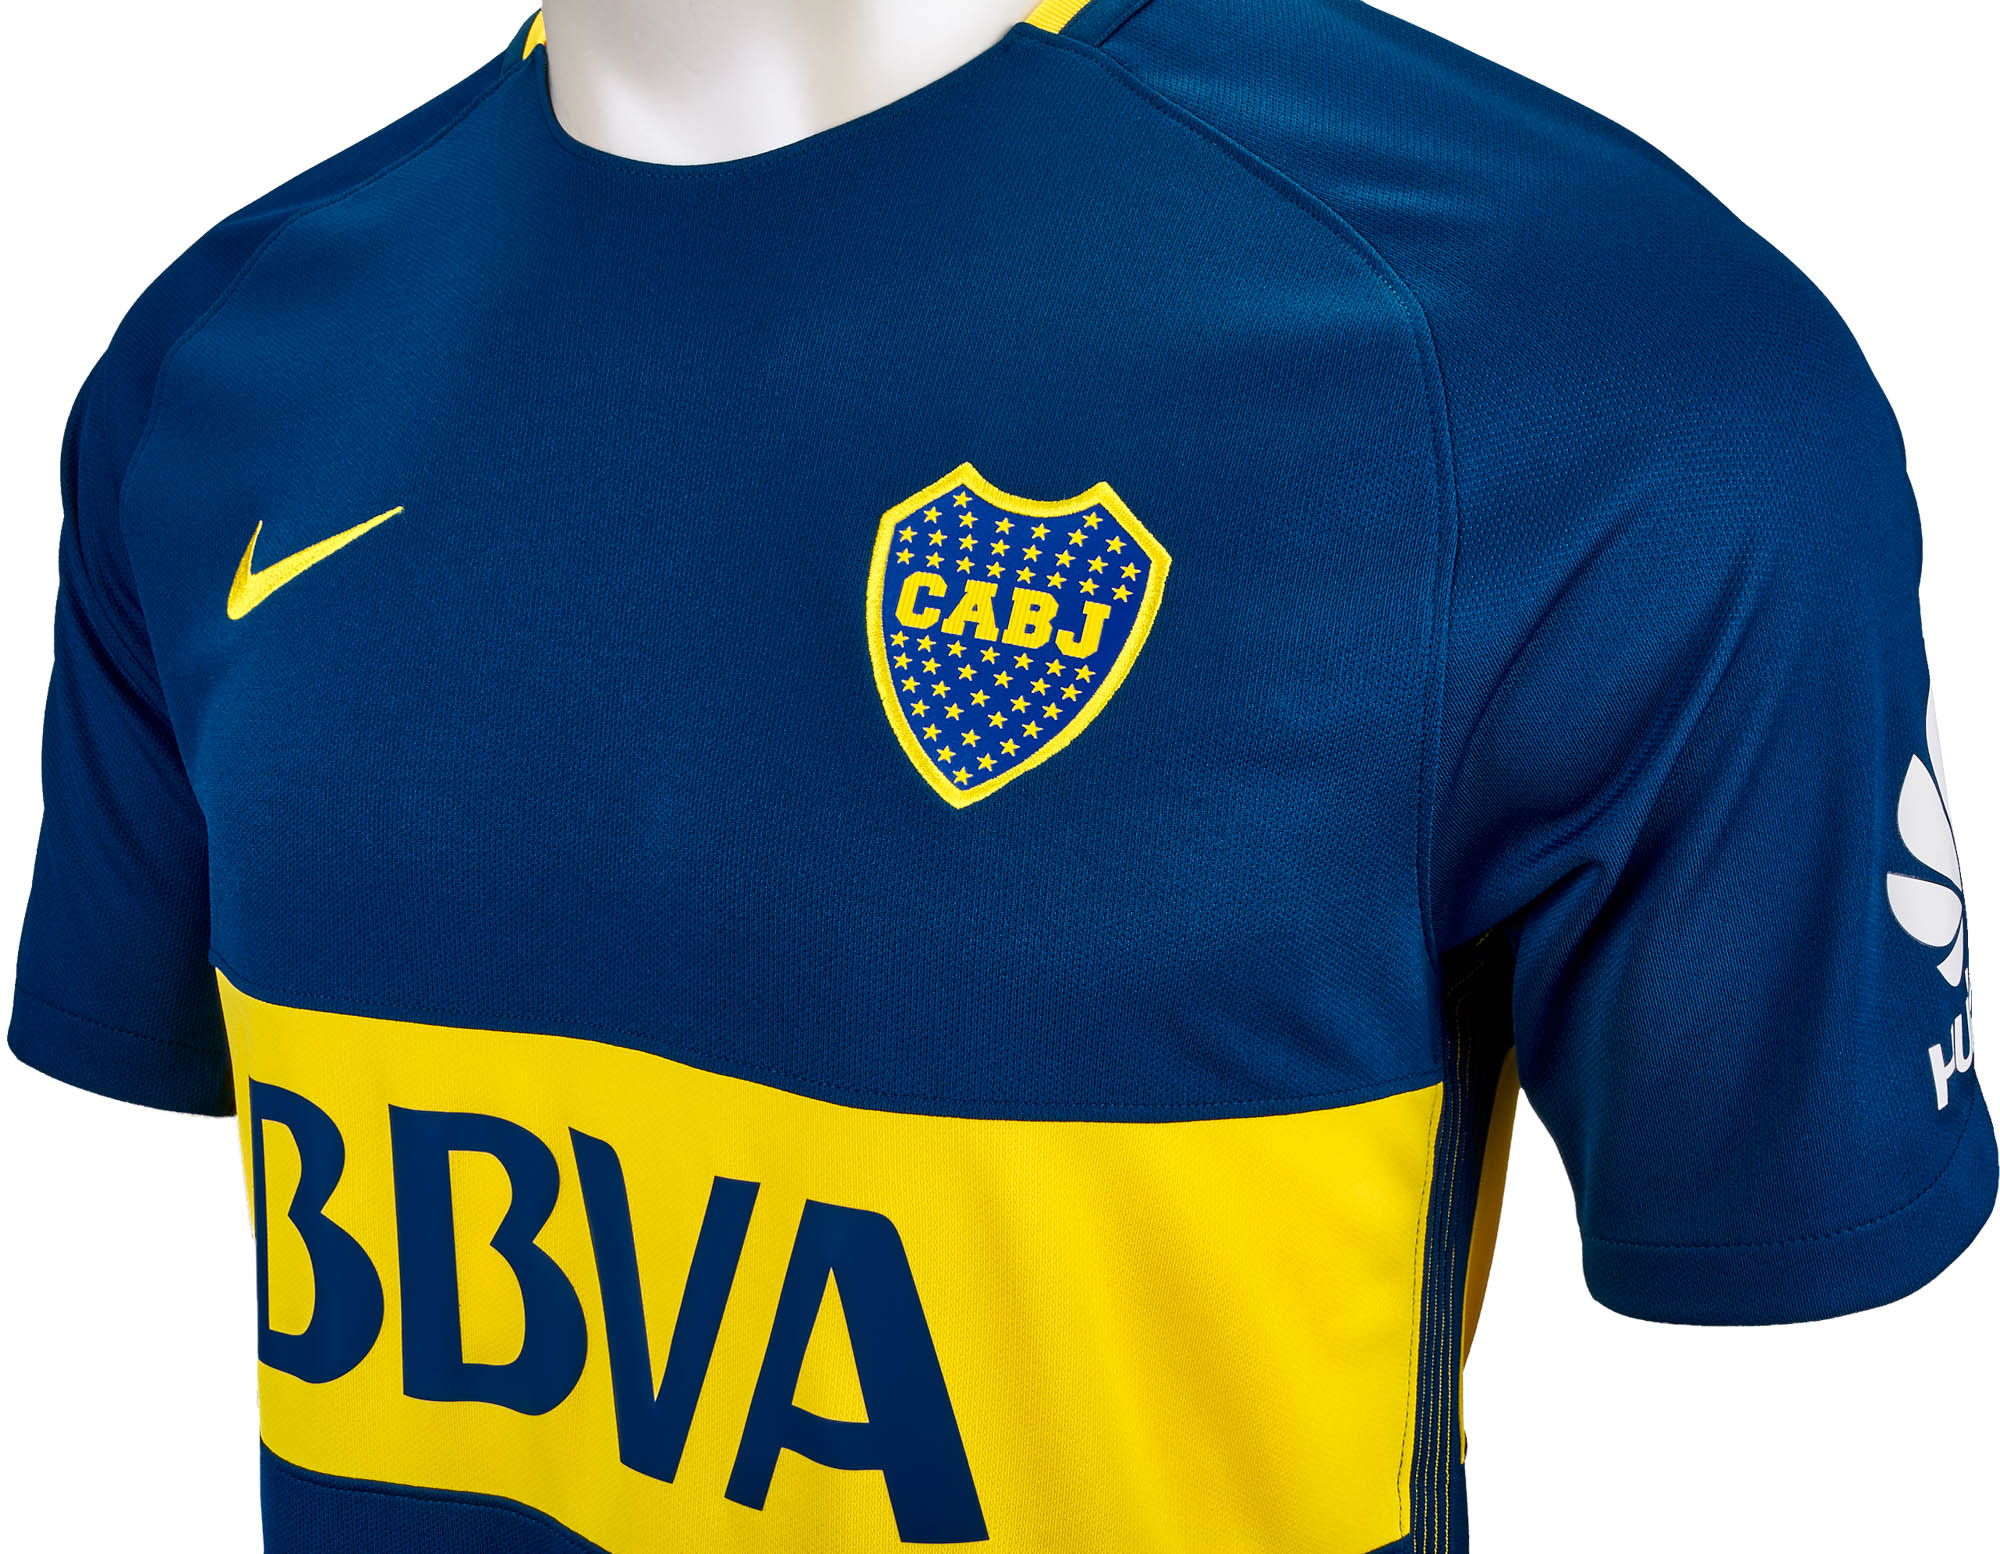 Nike Boca Juniors Home Jersey 17/18 